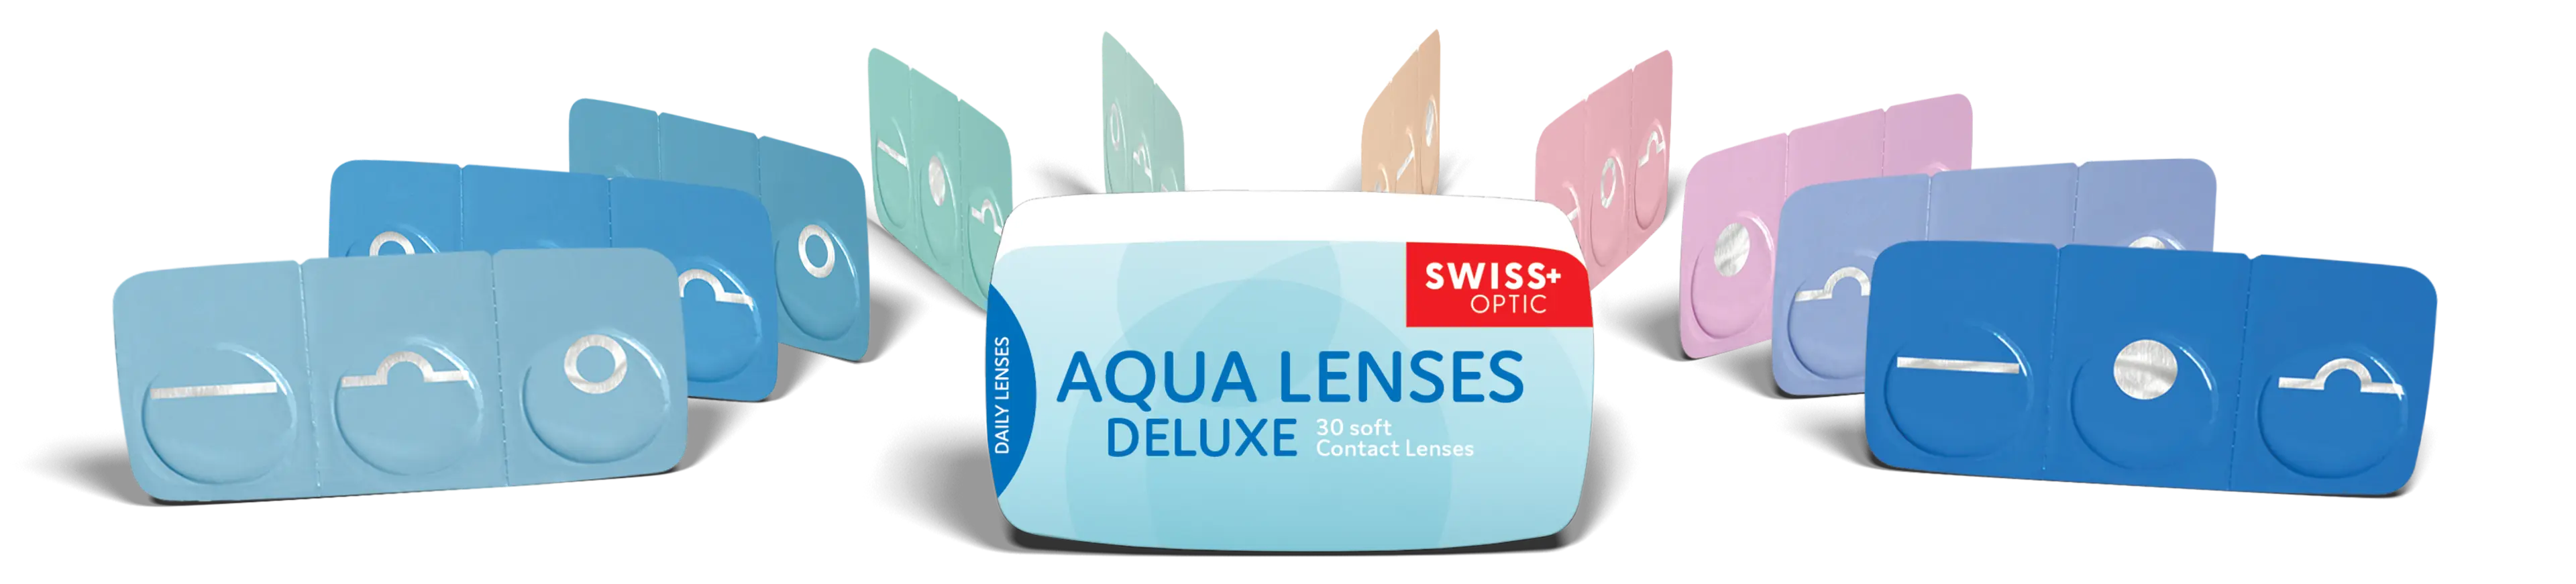 Swiss Optic Aqua Deluxe S